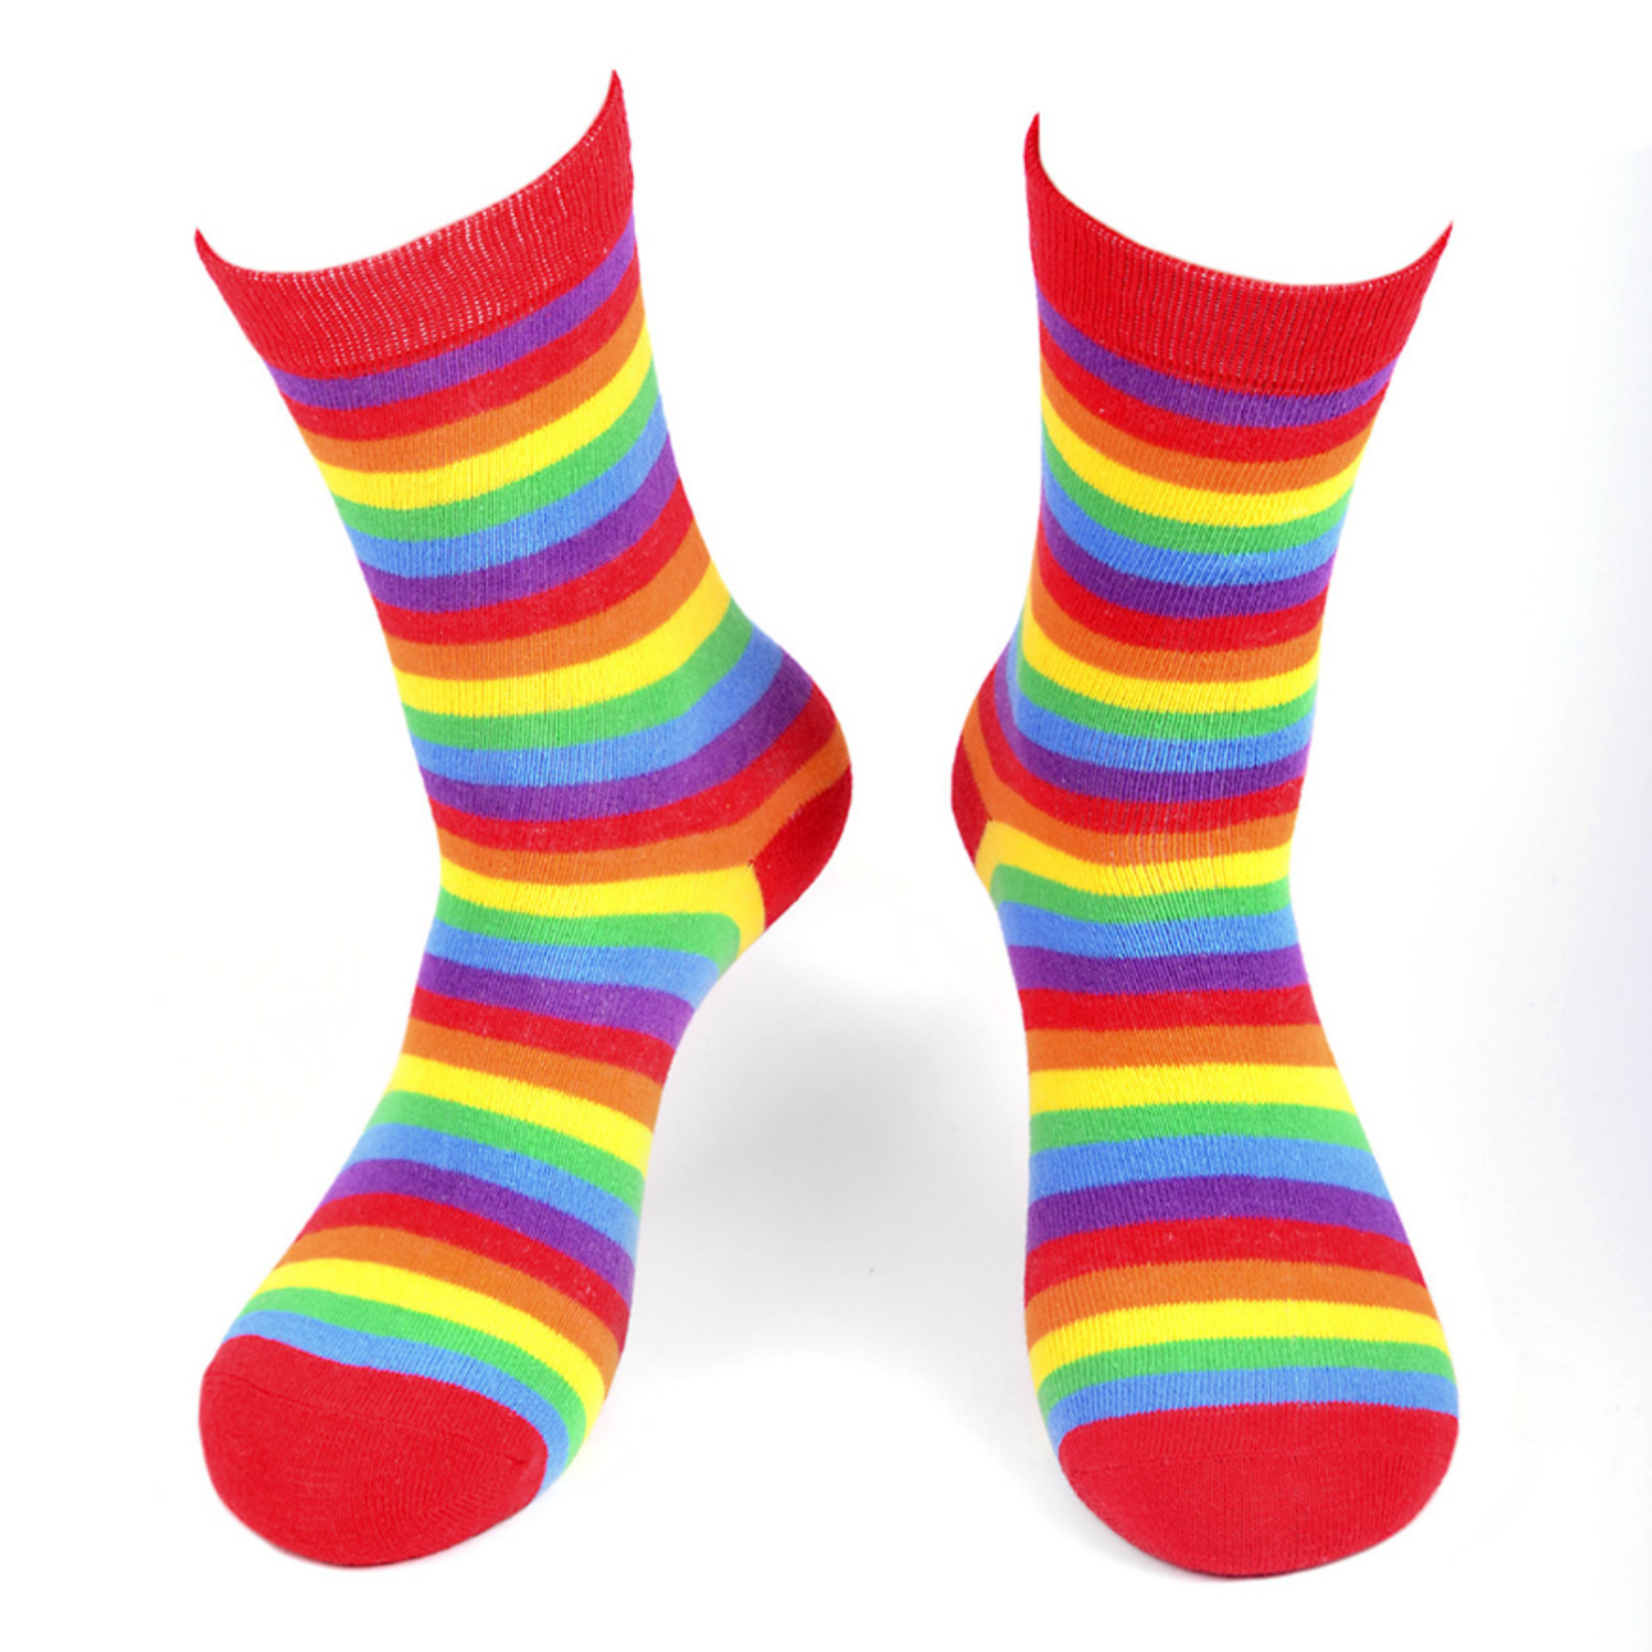 Apparel Women's Rainbow Socks